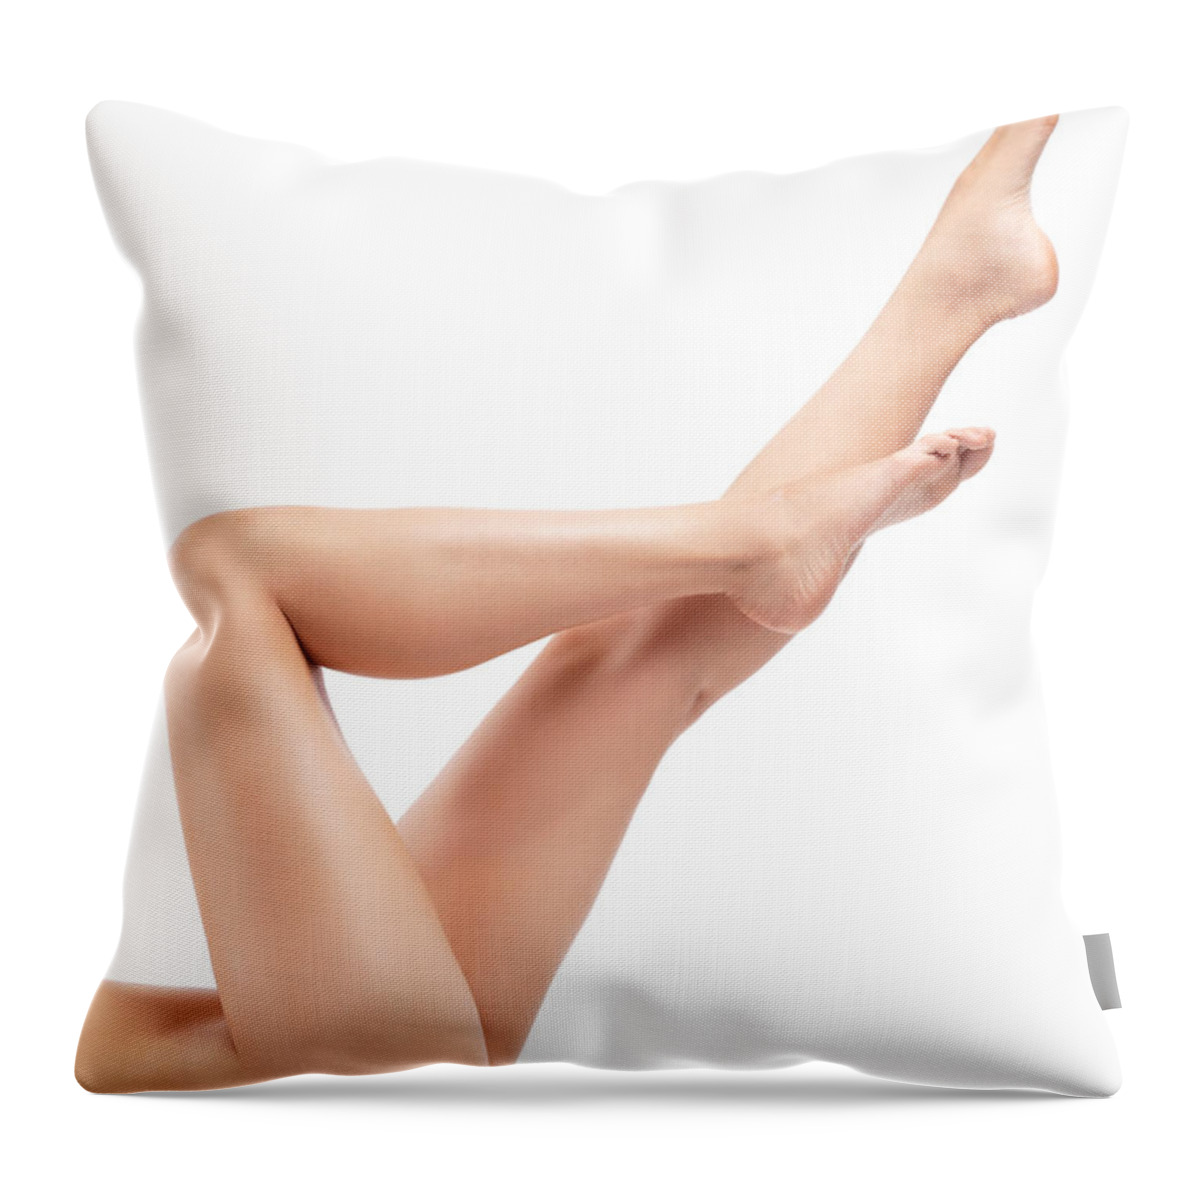 Bare Woman Legs #2 Throw Pillow